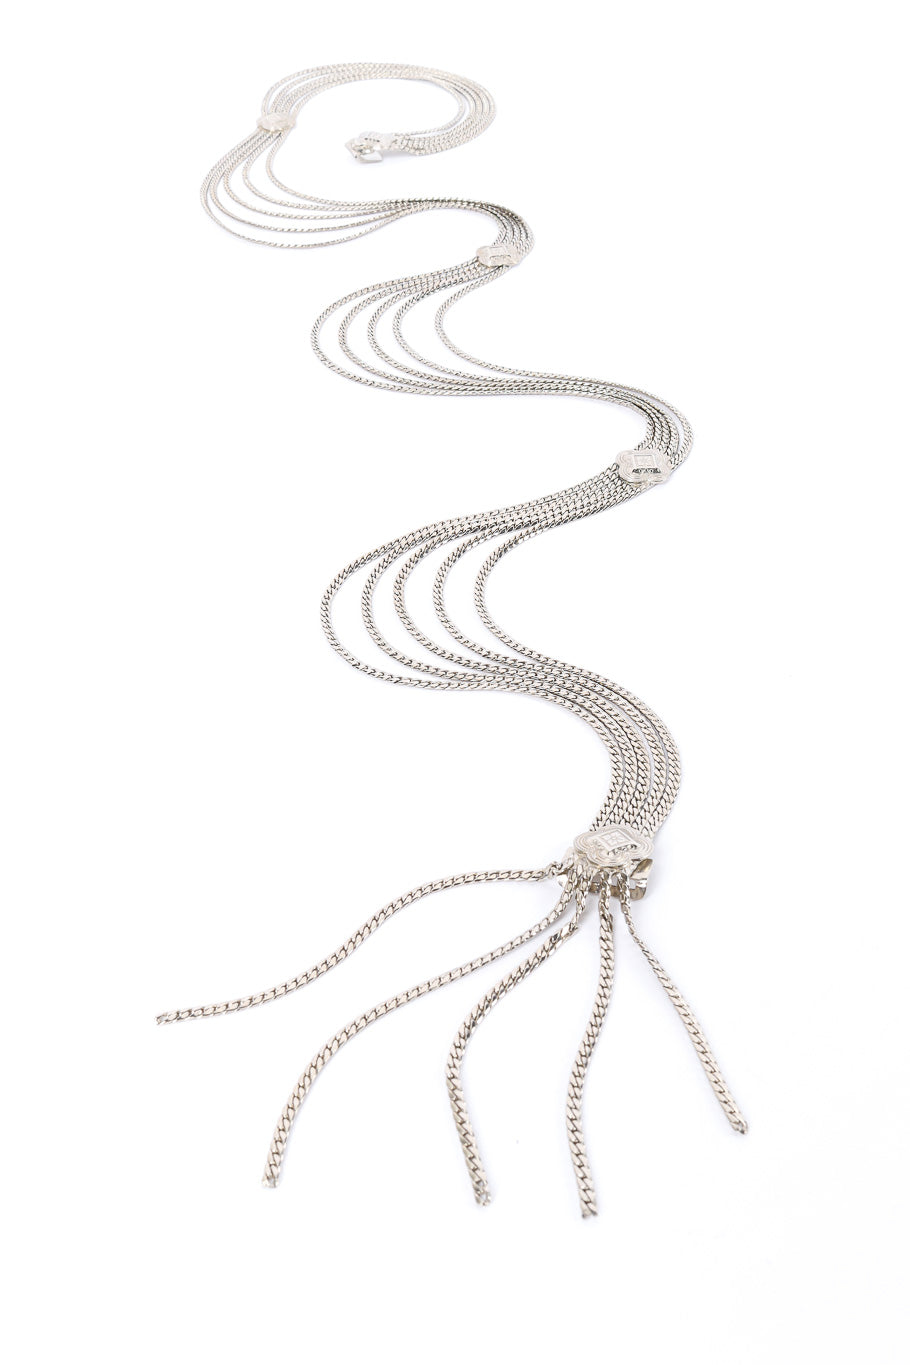 Waist chain belt by Christian Dior flat lay squiggle shape @recessla